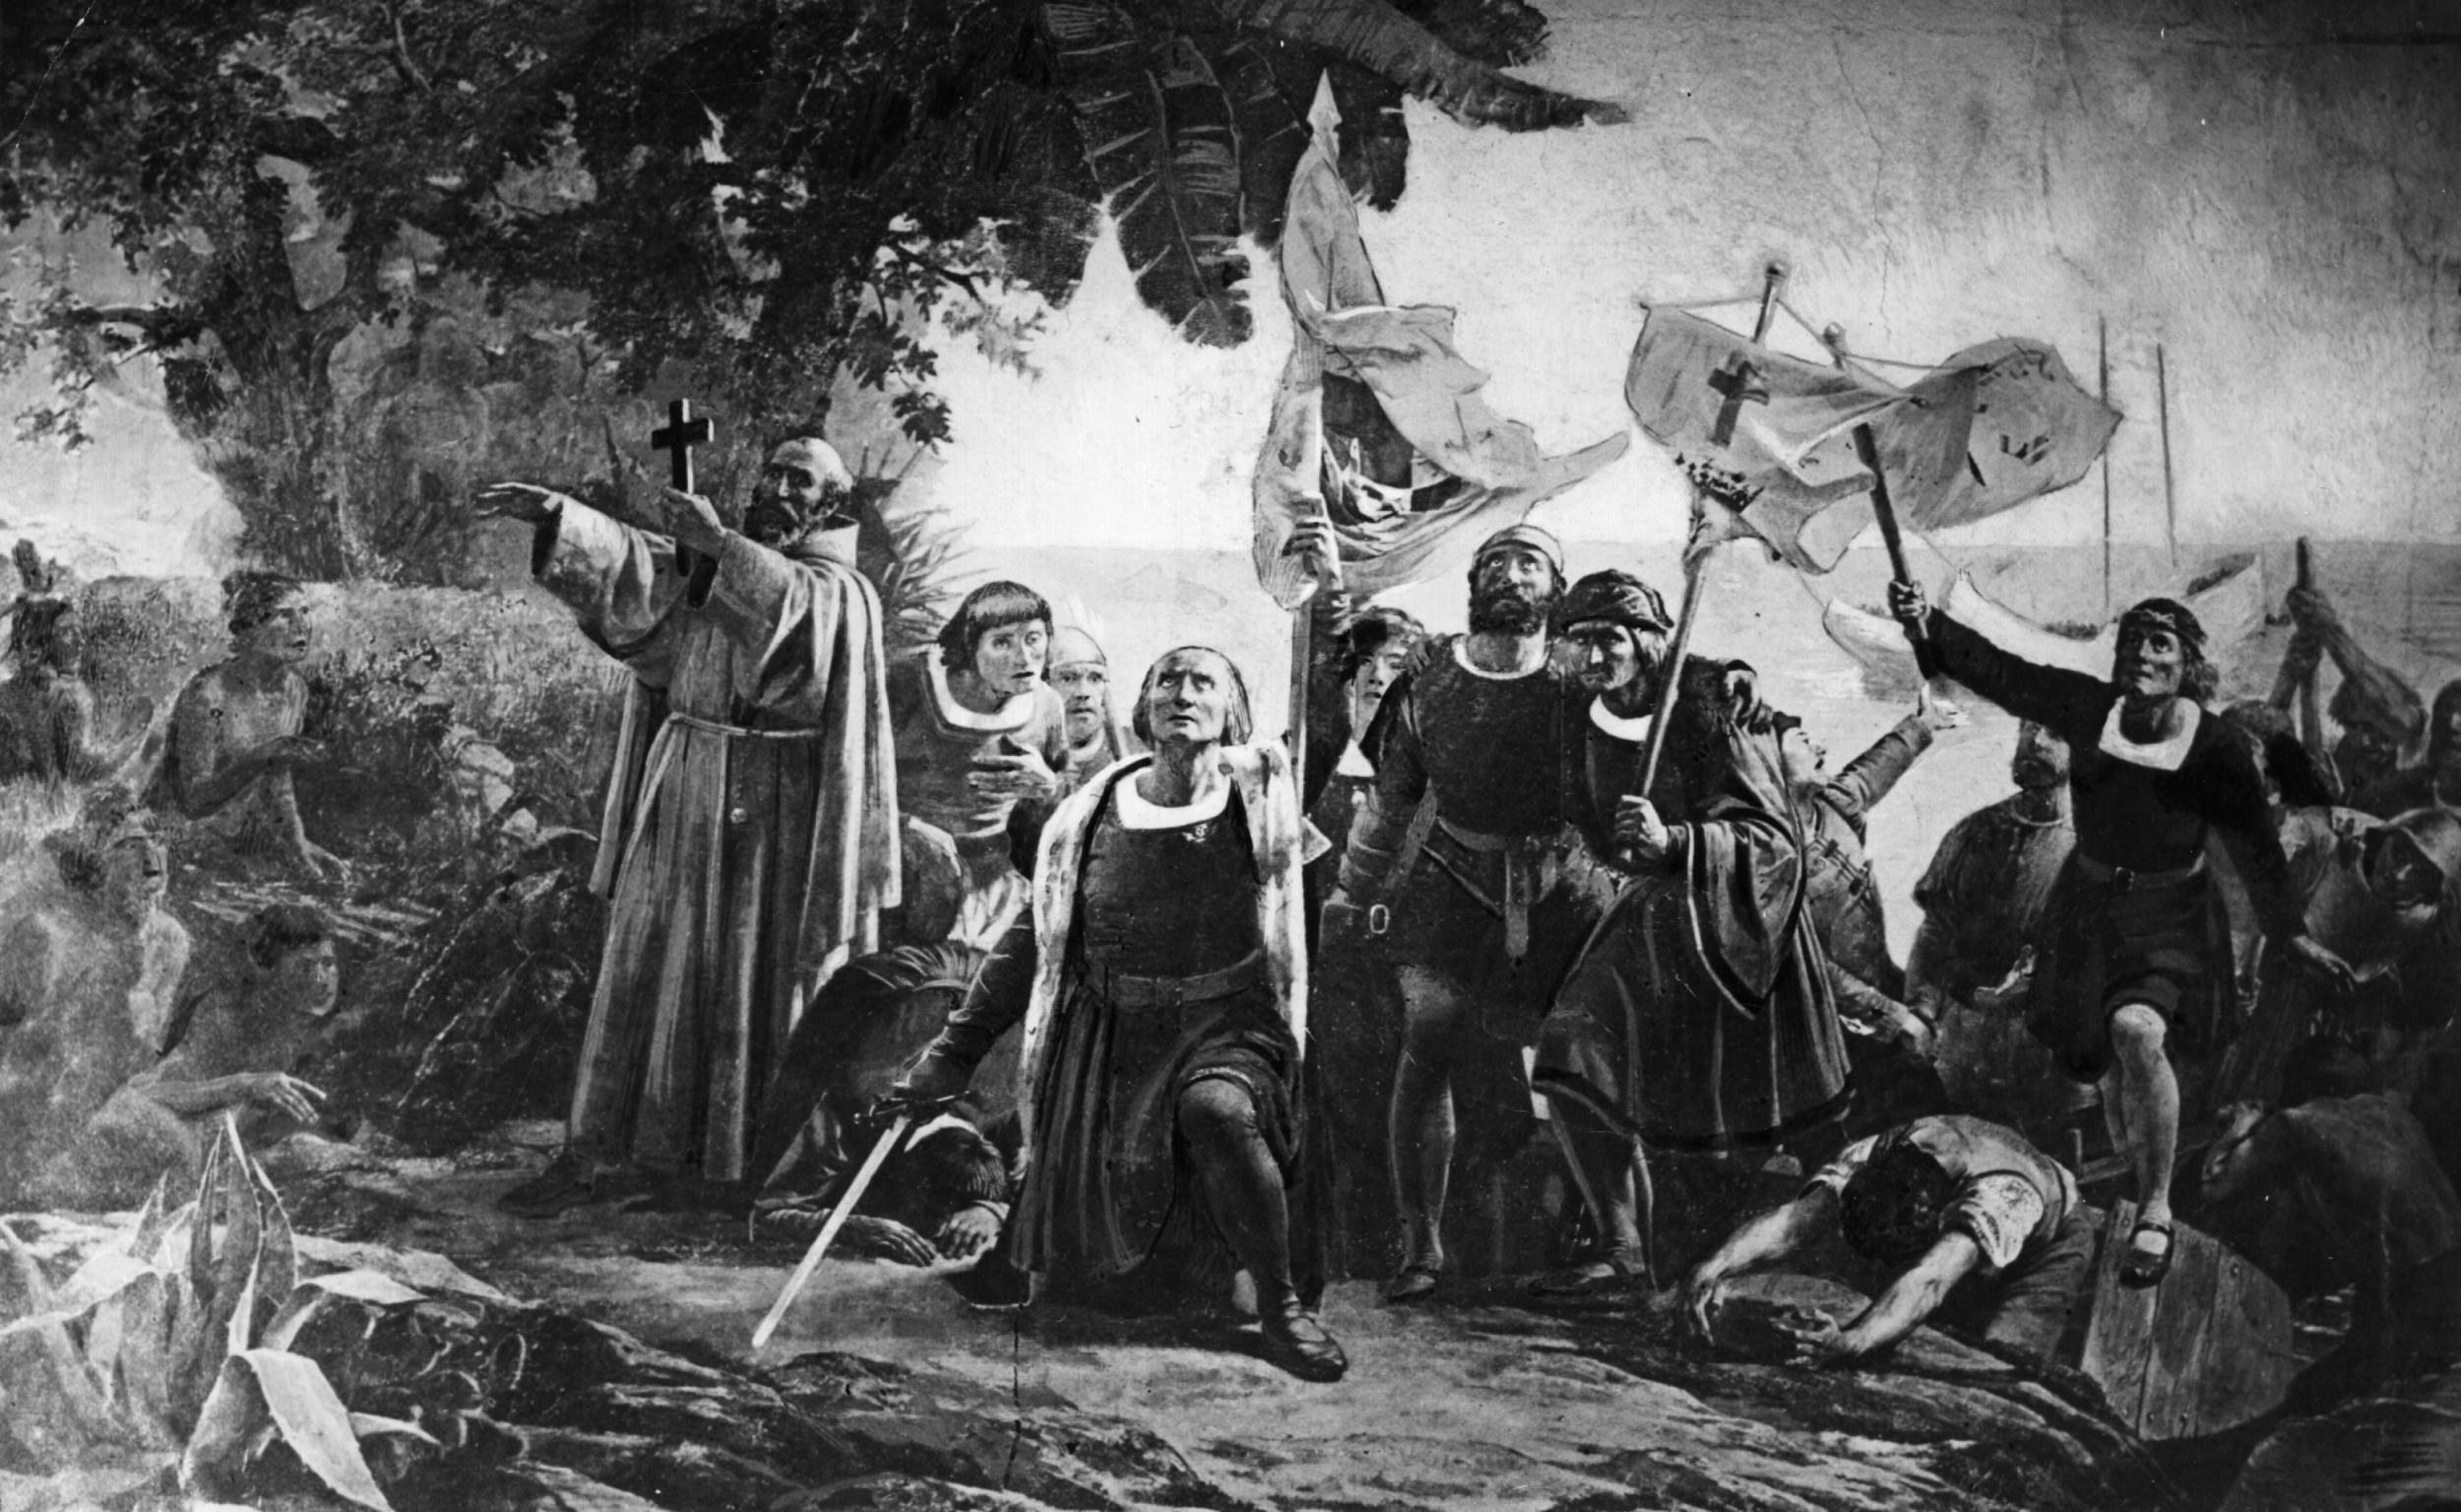 Columbus landing in the Americas in 1492